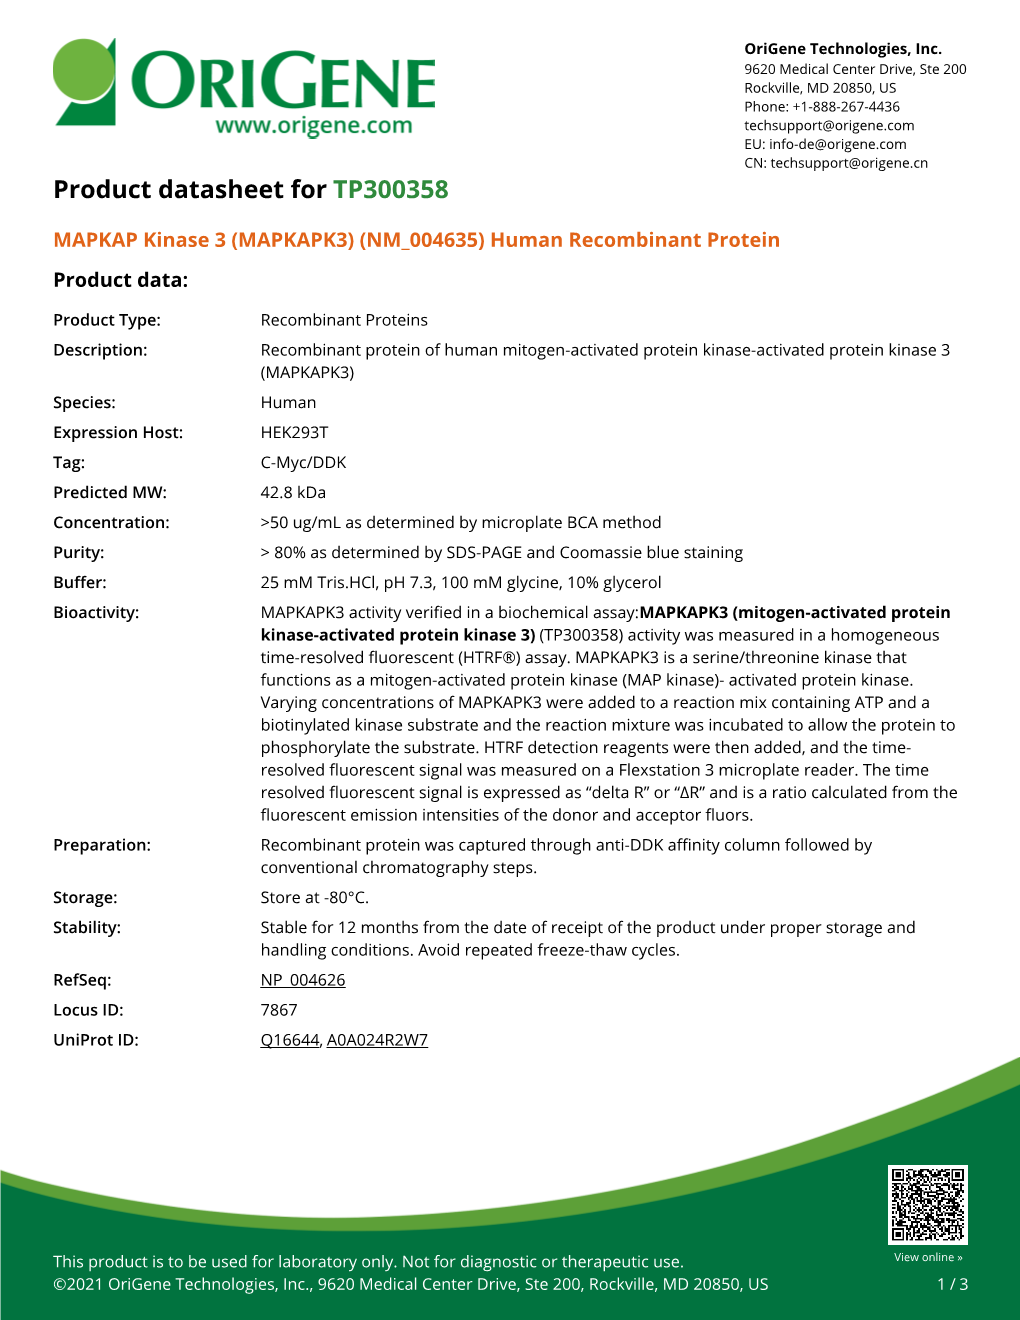 MAPKAP Kinase 3 (MAPKAPK3) (NM 004635) Human Recombinant Protein Product Data